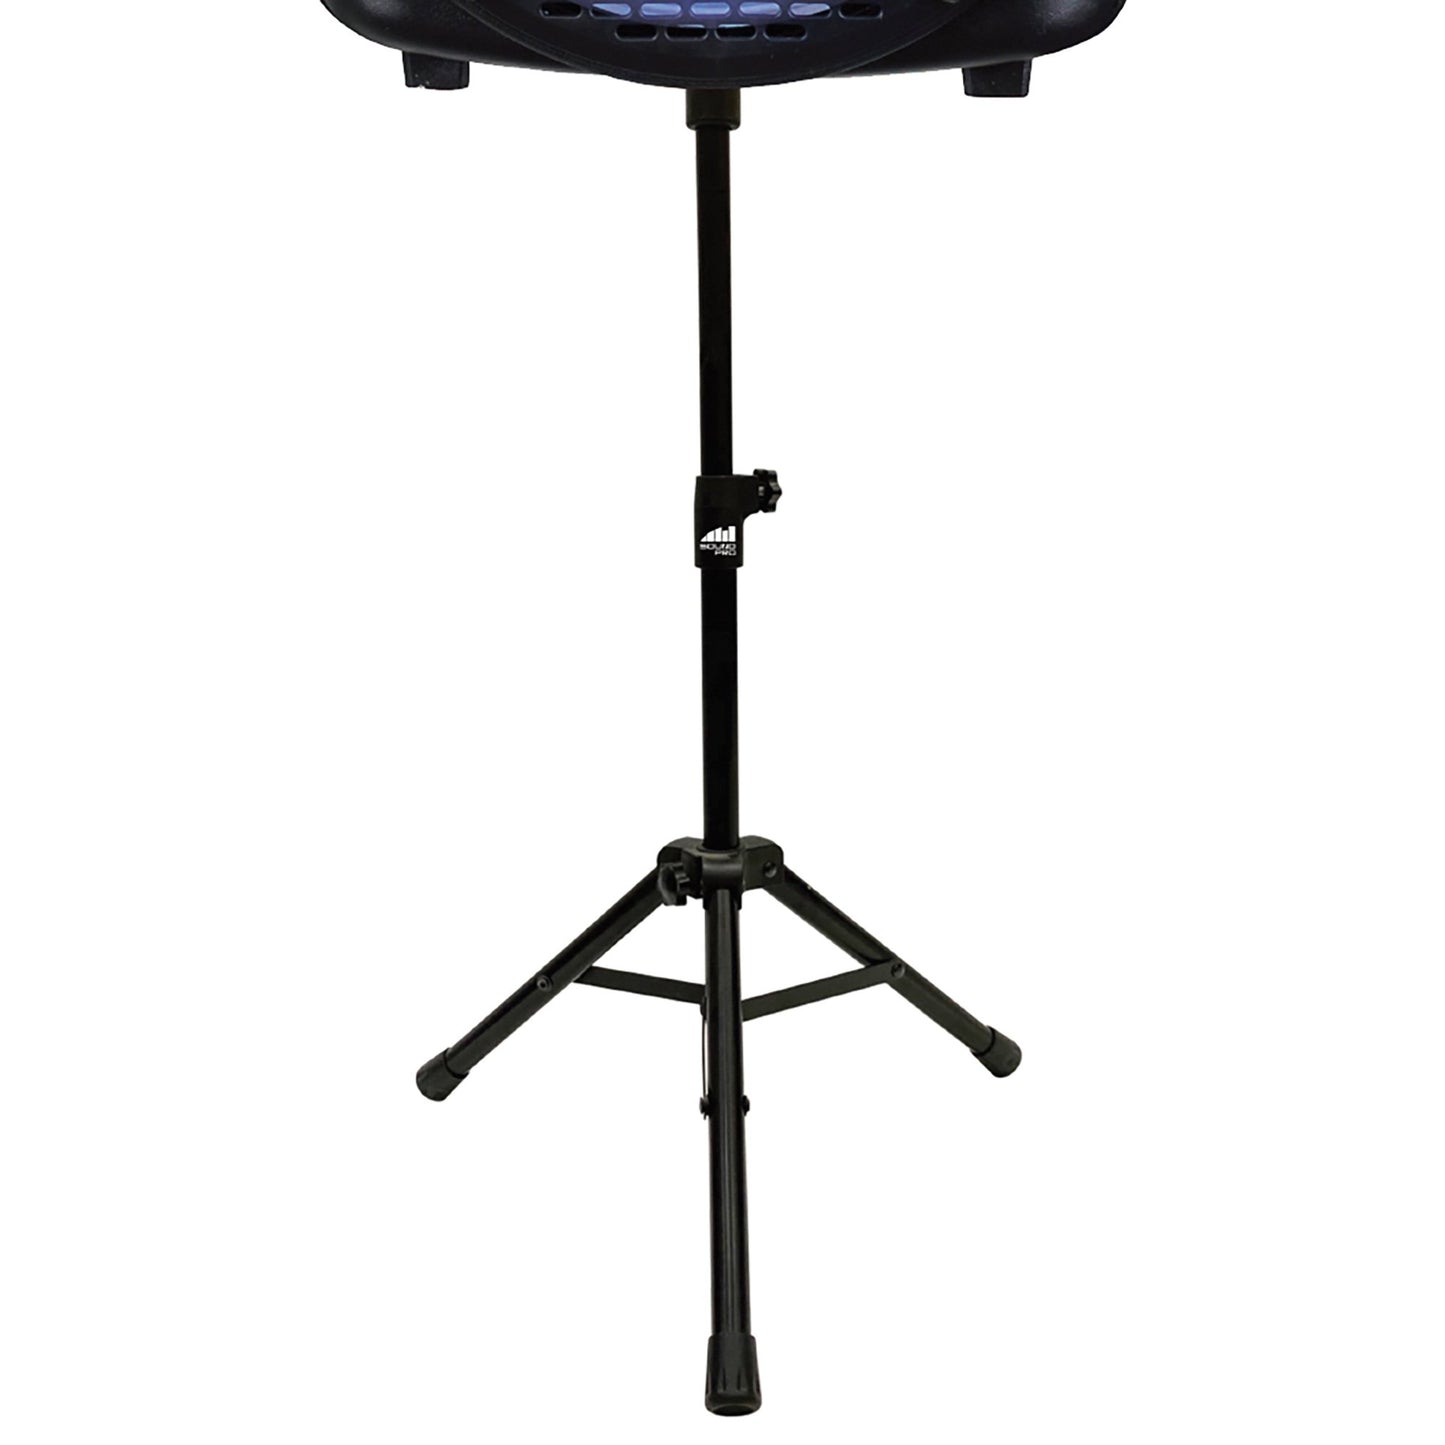 NAXA NDS-8010 Sound Pro 8" 2000W Portable BT Speaker w/Lights Stand & Microphone